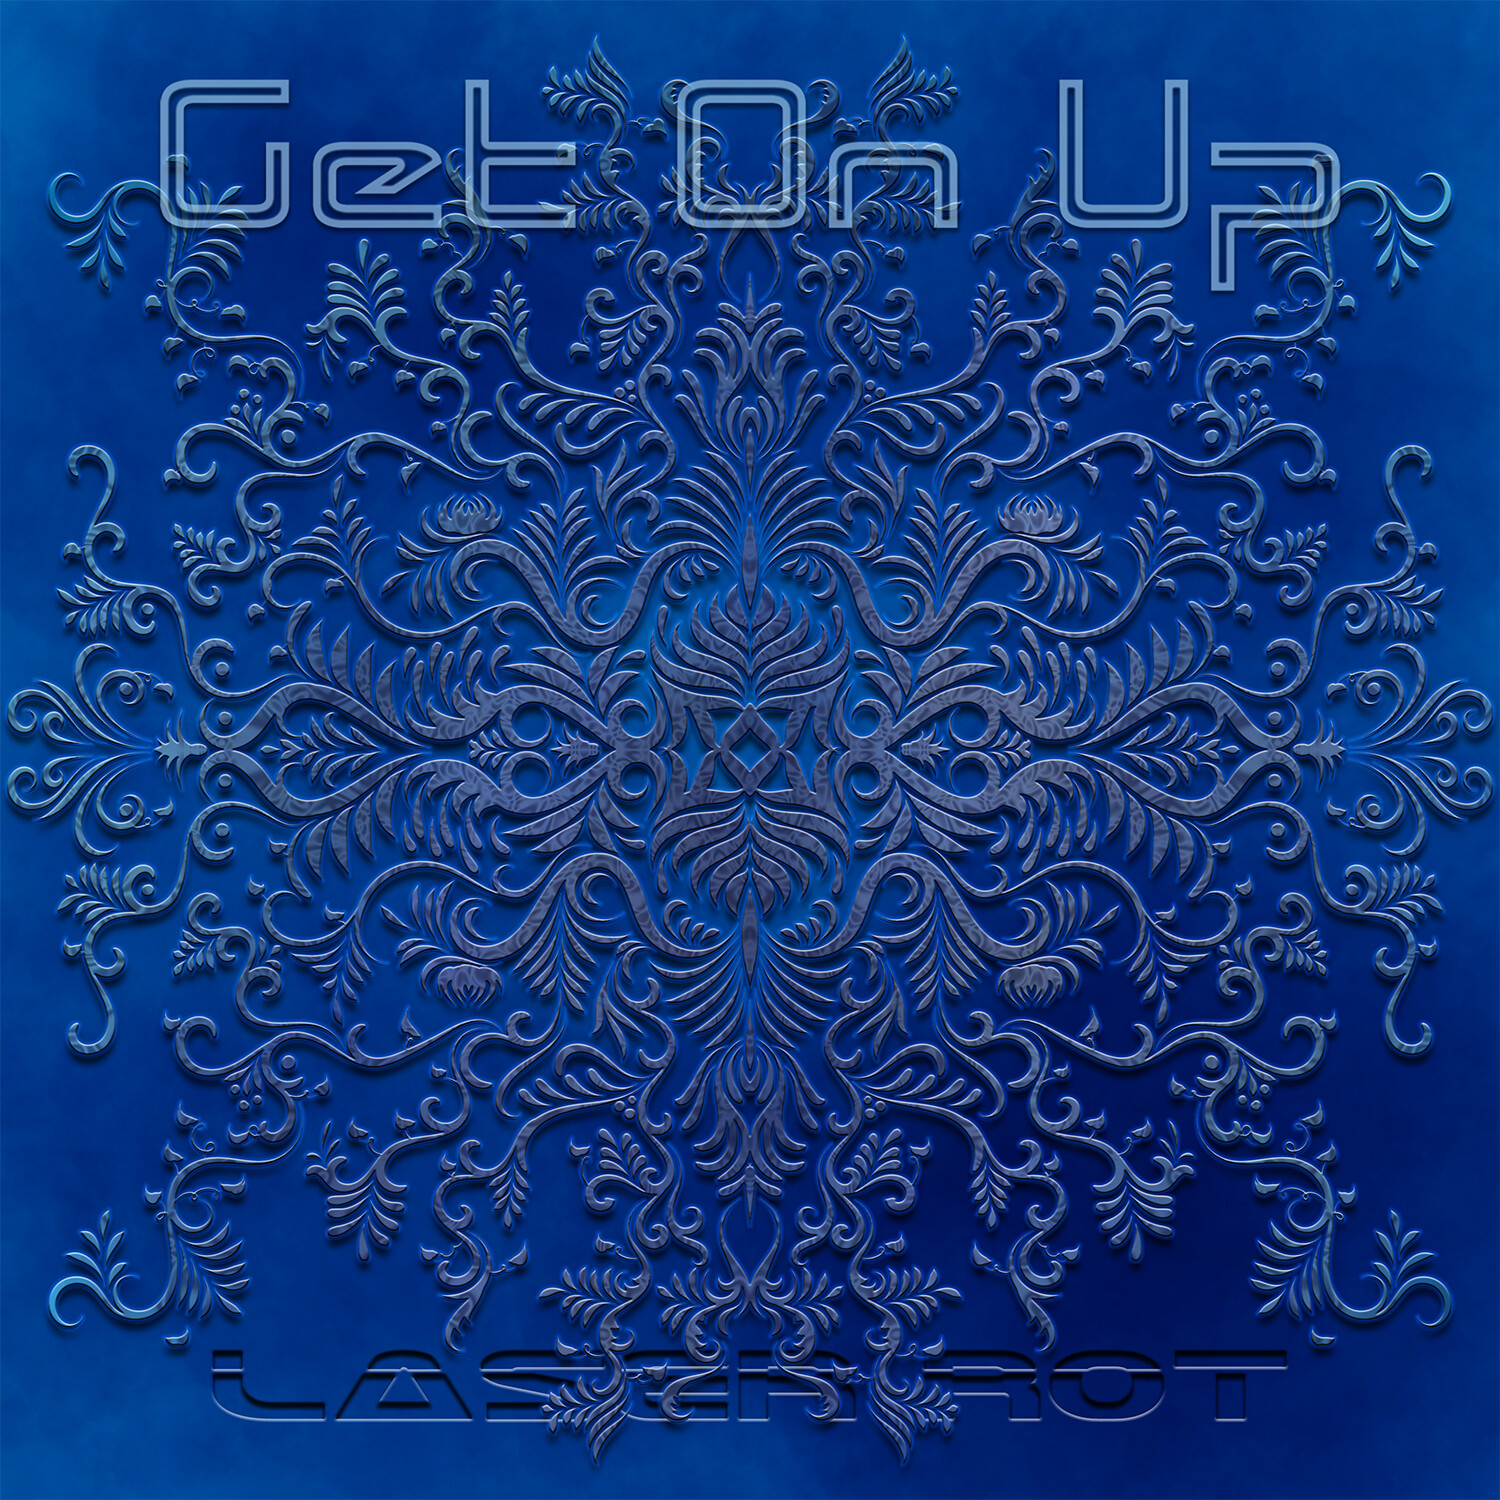 Get On Up (Album Cover Artwork)